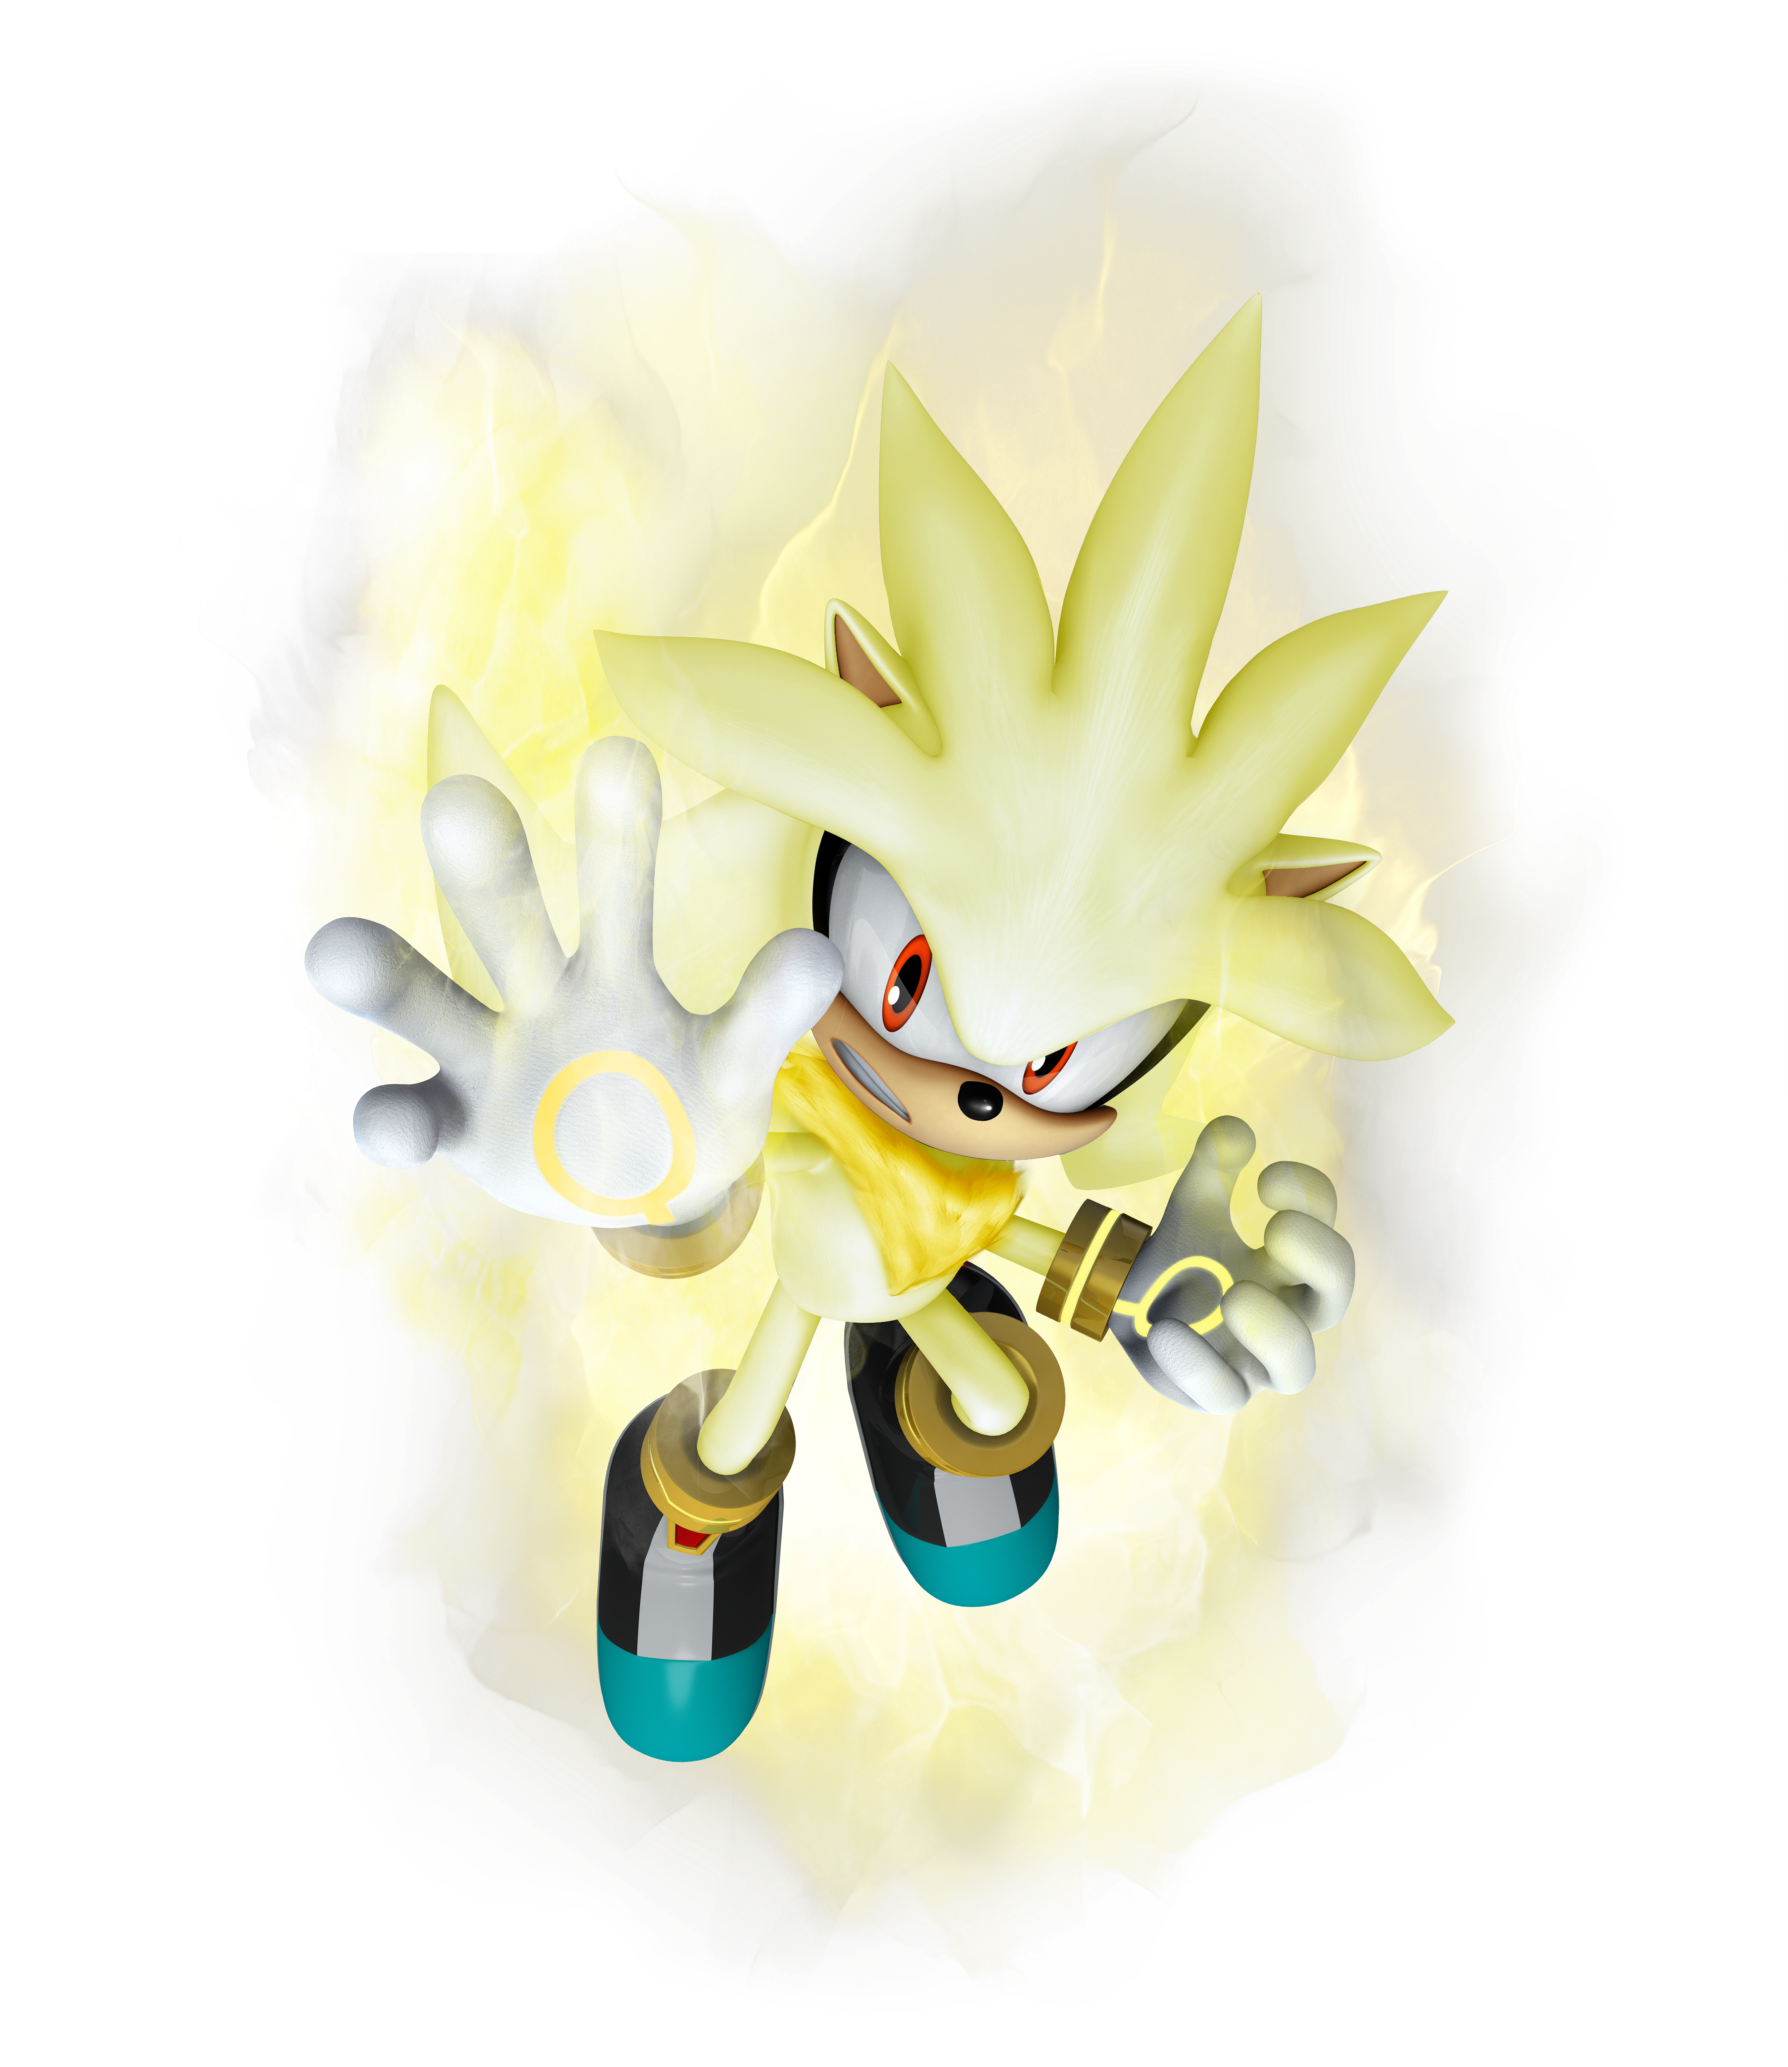 Silver the Hedgehog, Sonic x Season 4 Wiki